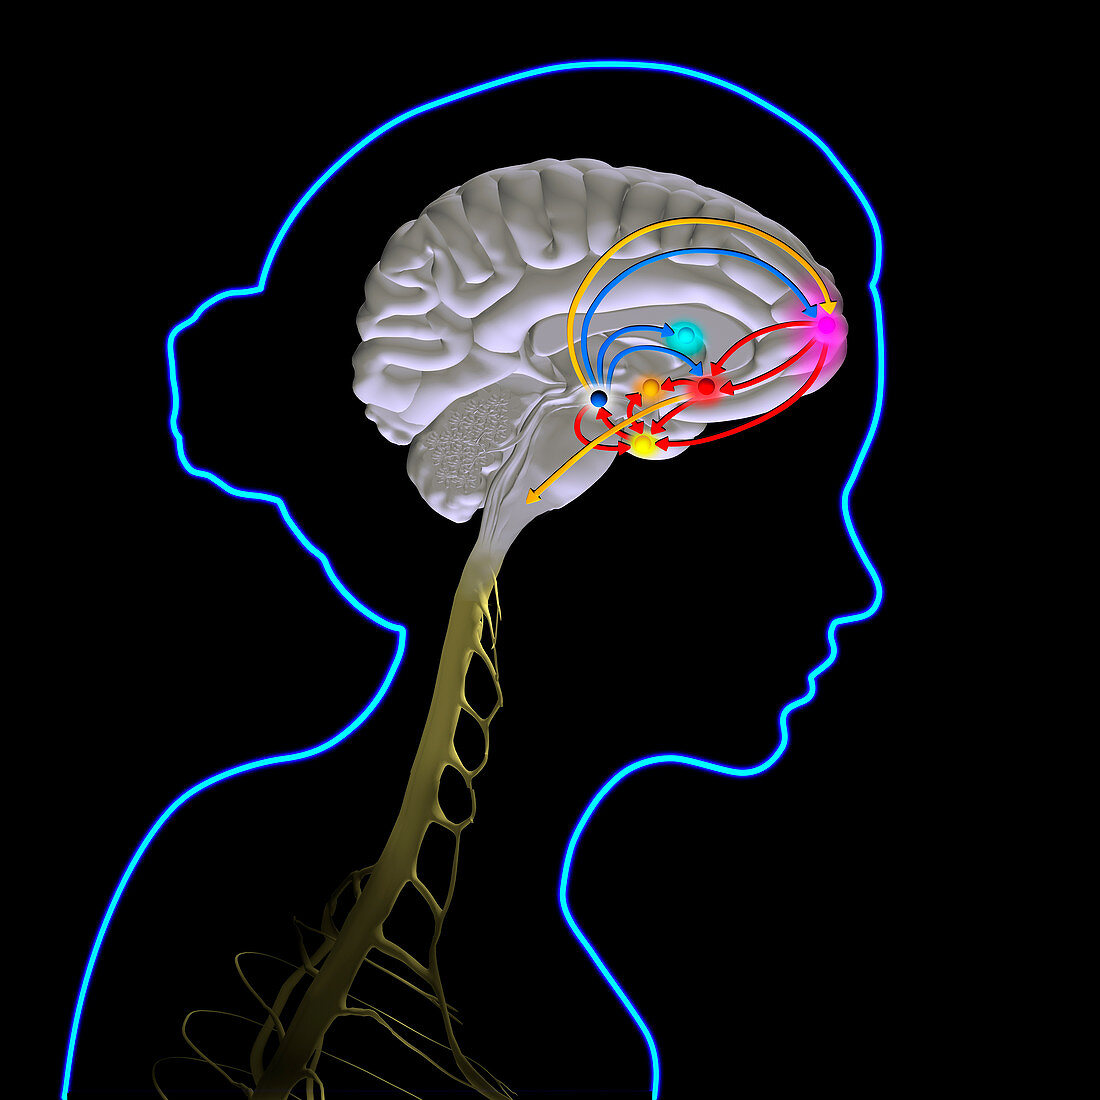 Brain reward pathway, illustration